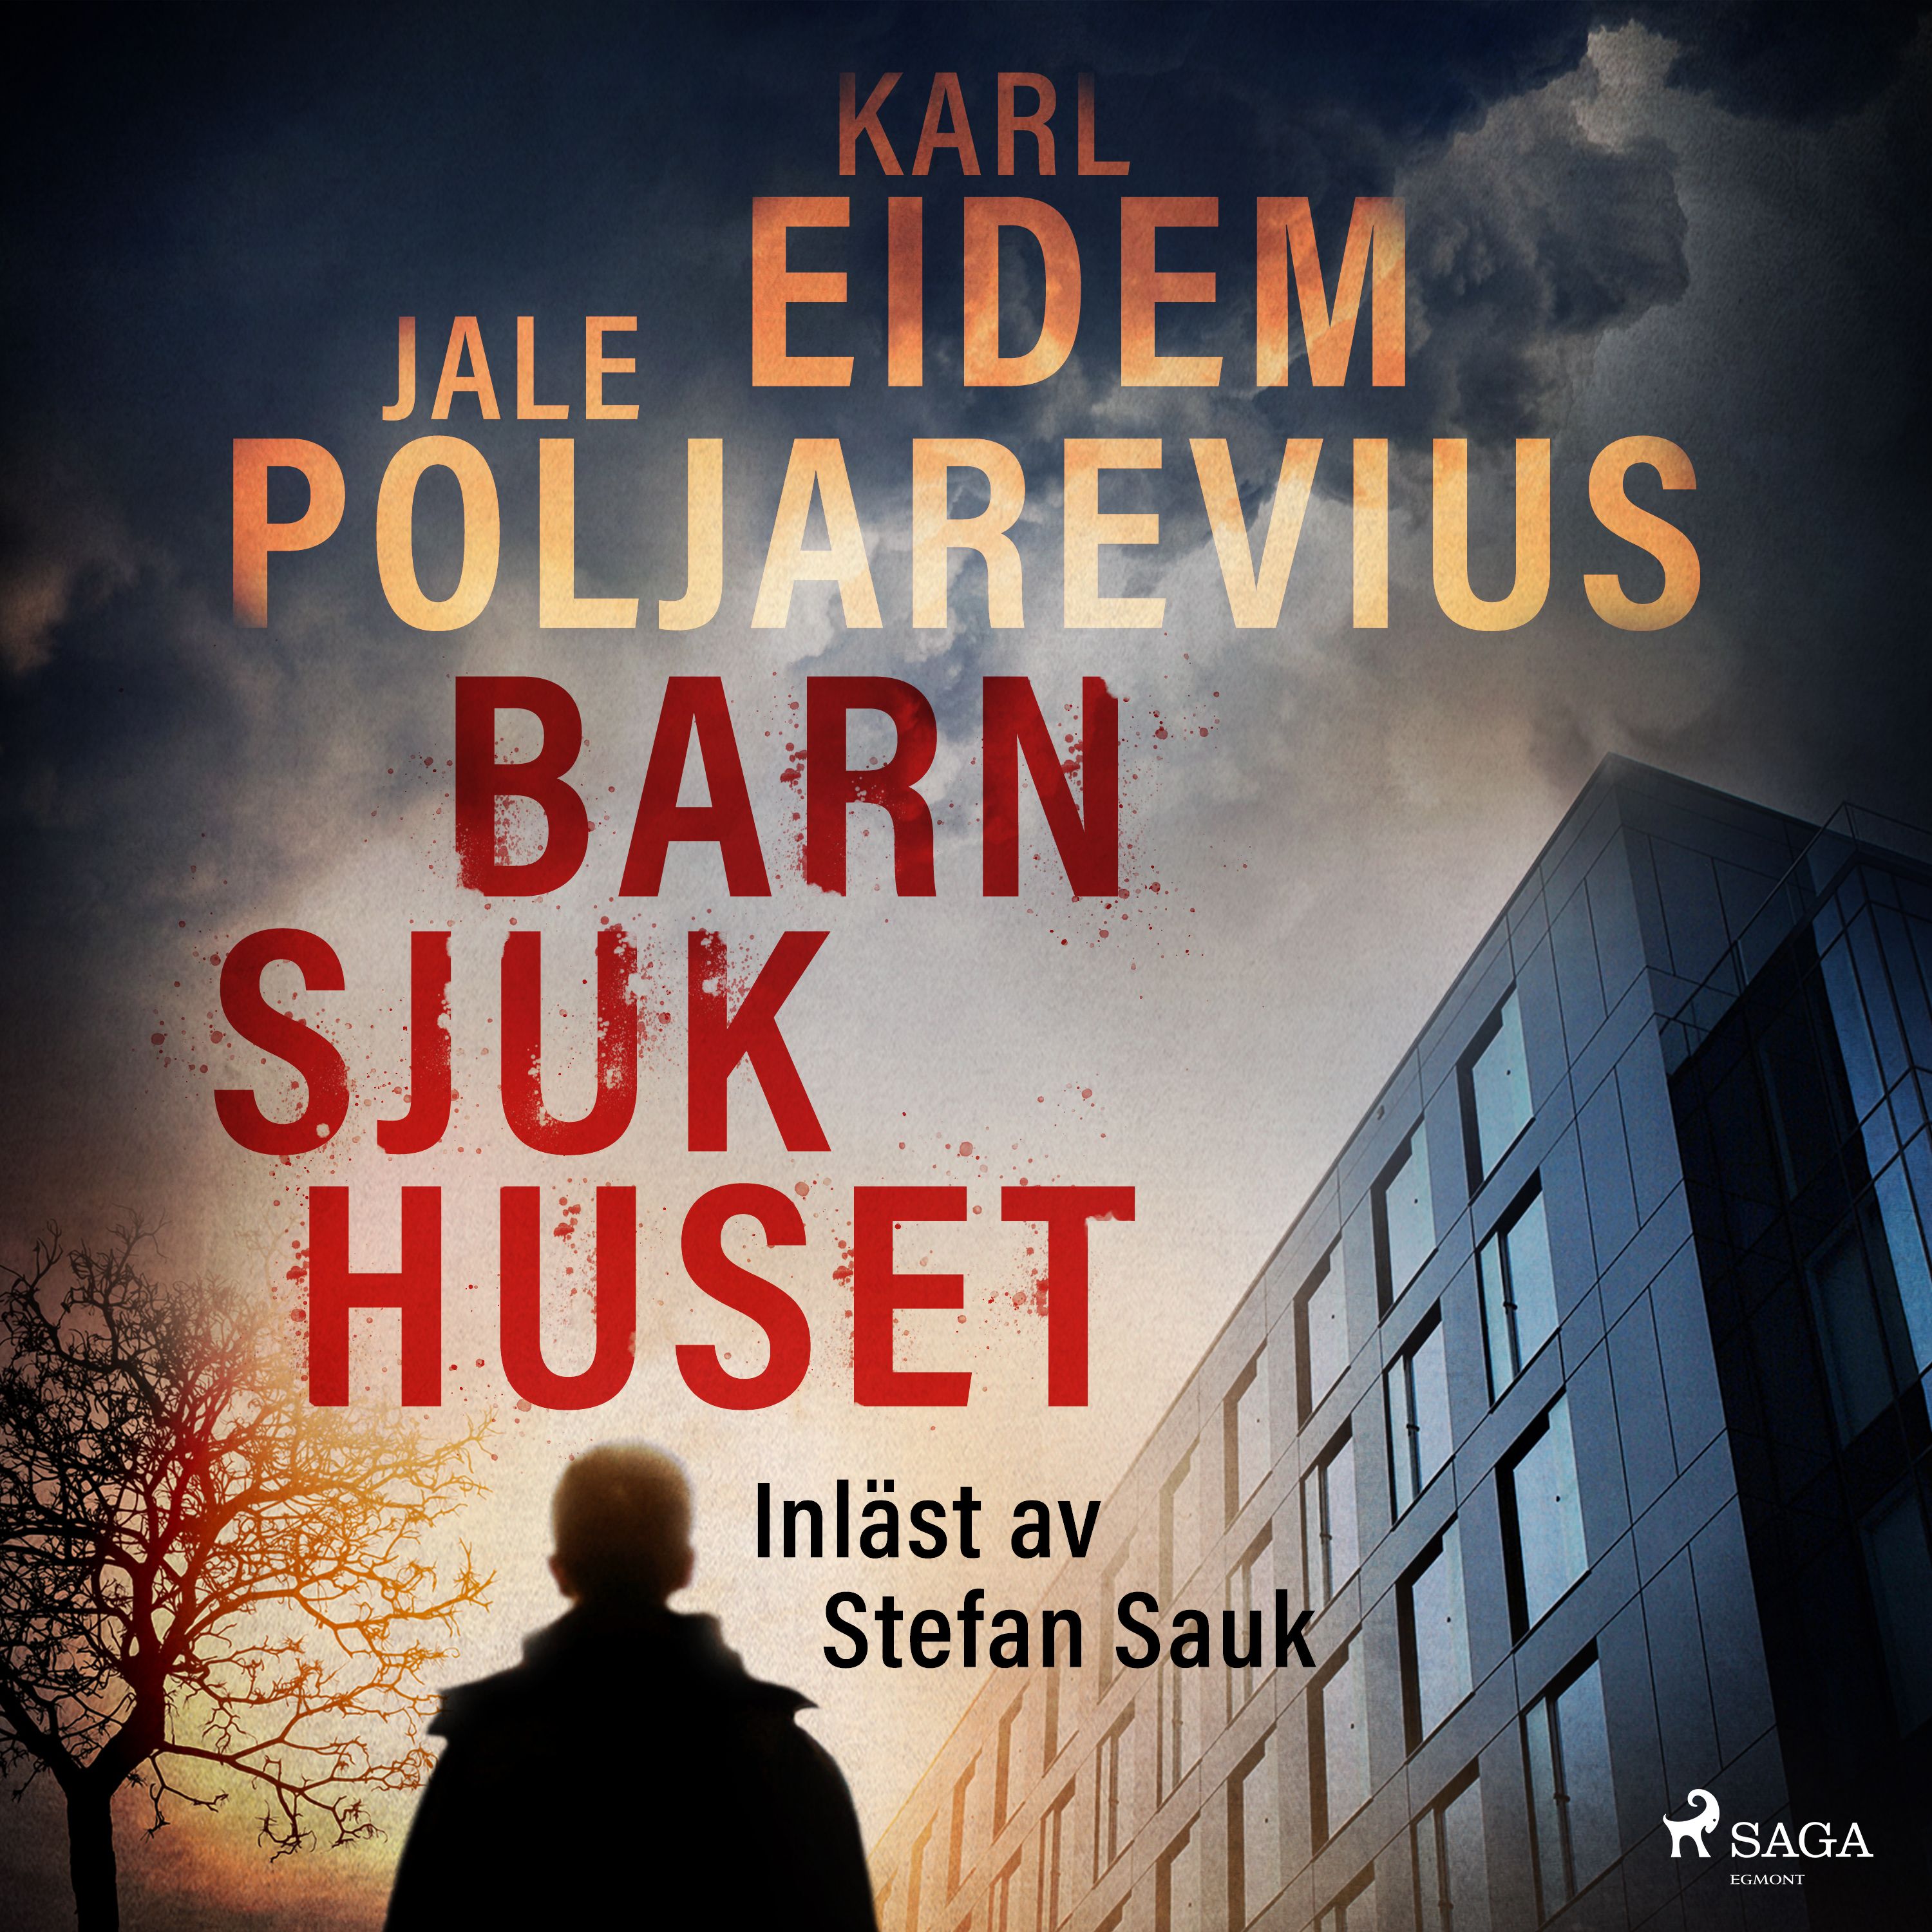 Barnsjukhuset, audiobook by Karl Eidem, Jale Poljarevius